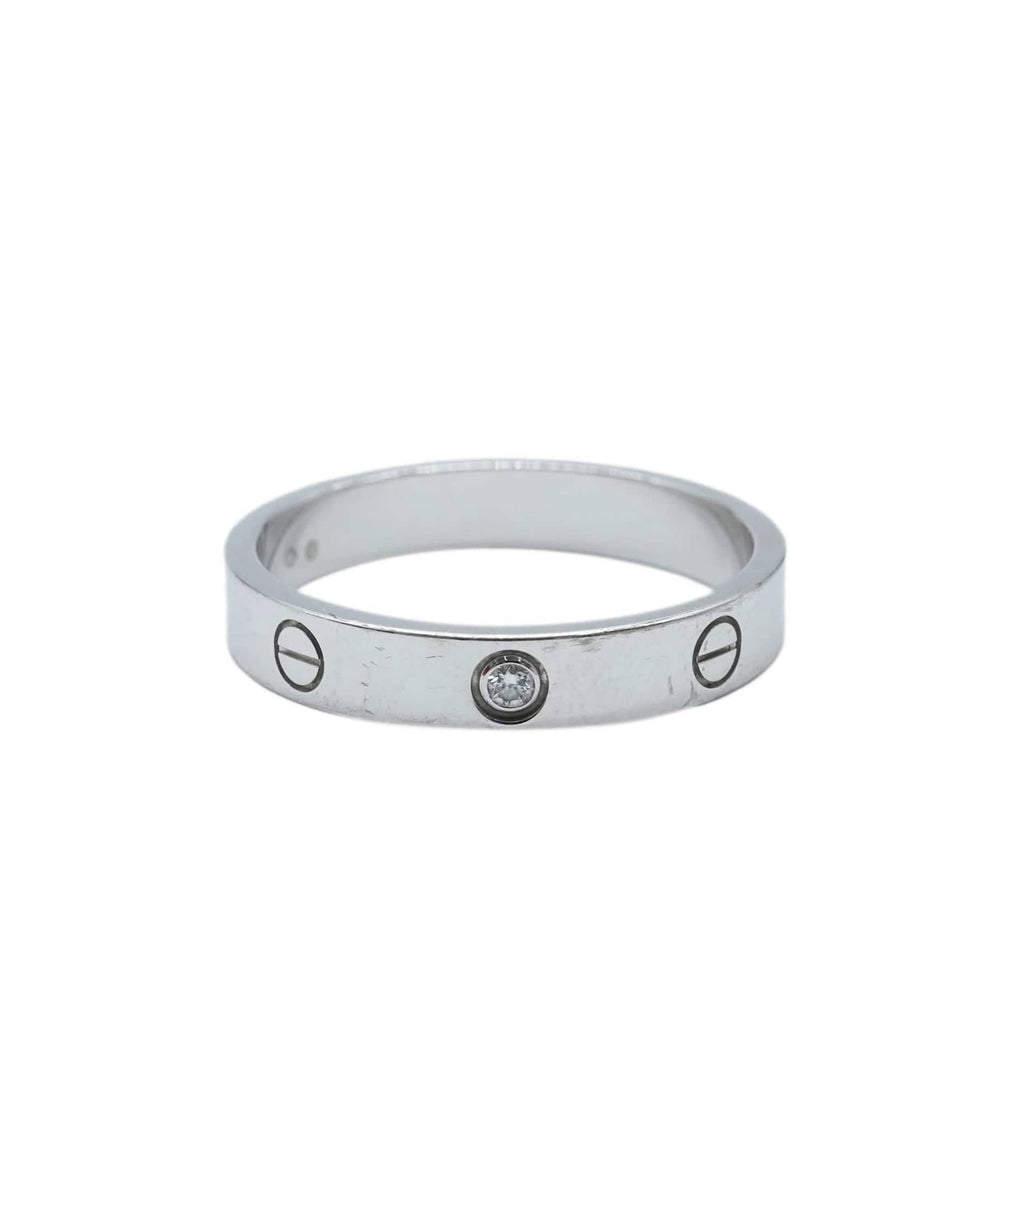 CRB4210400 - Étincelle de Cartier wedding ring - White gold, diamonds -  Cartier